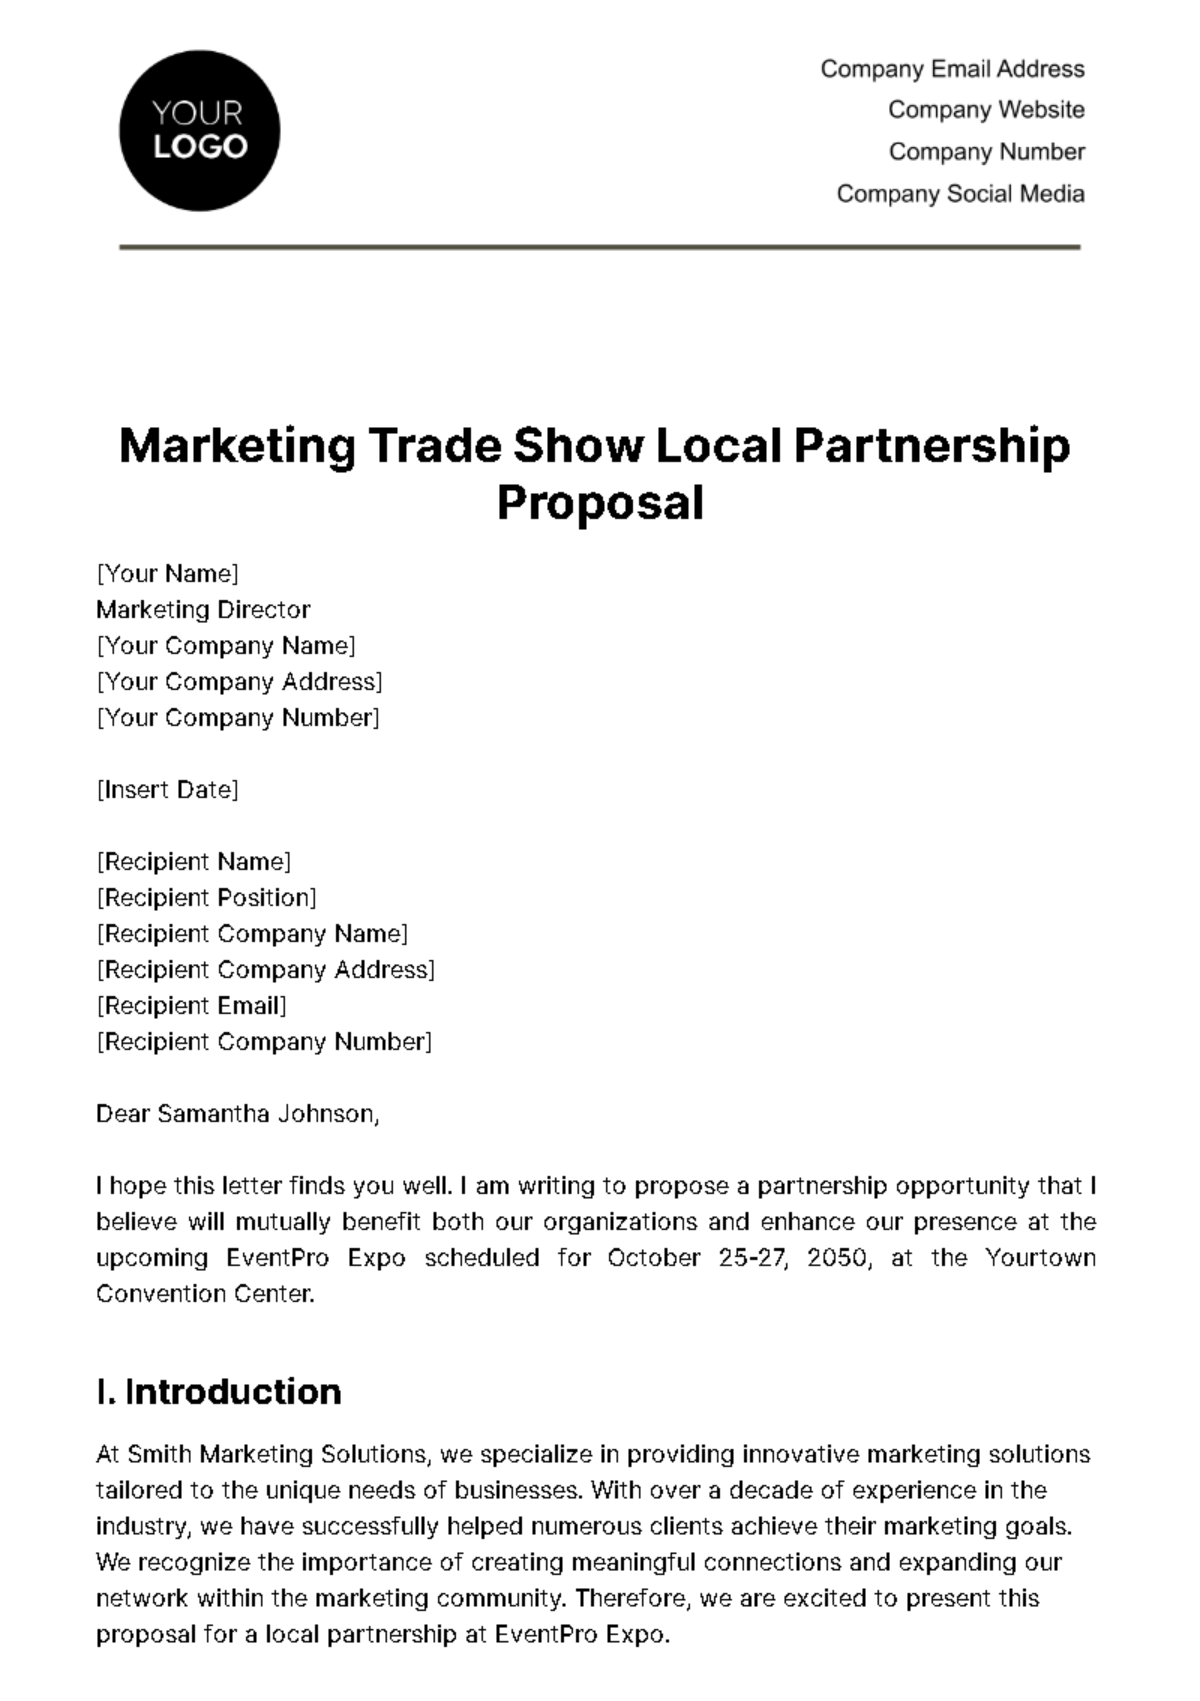 Free Marketing Trade Show Local Partnership Proposal Template